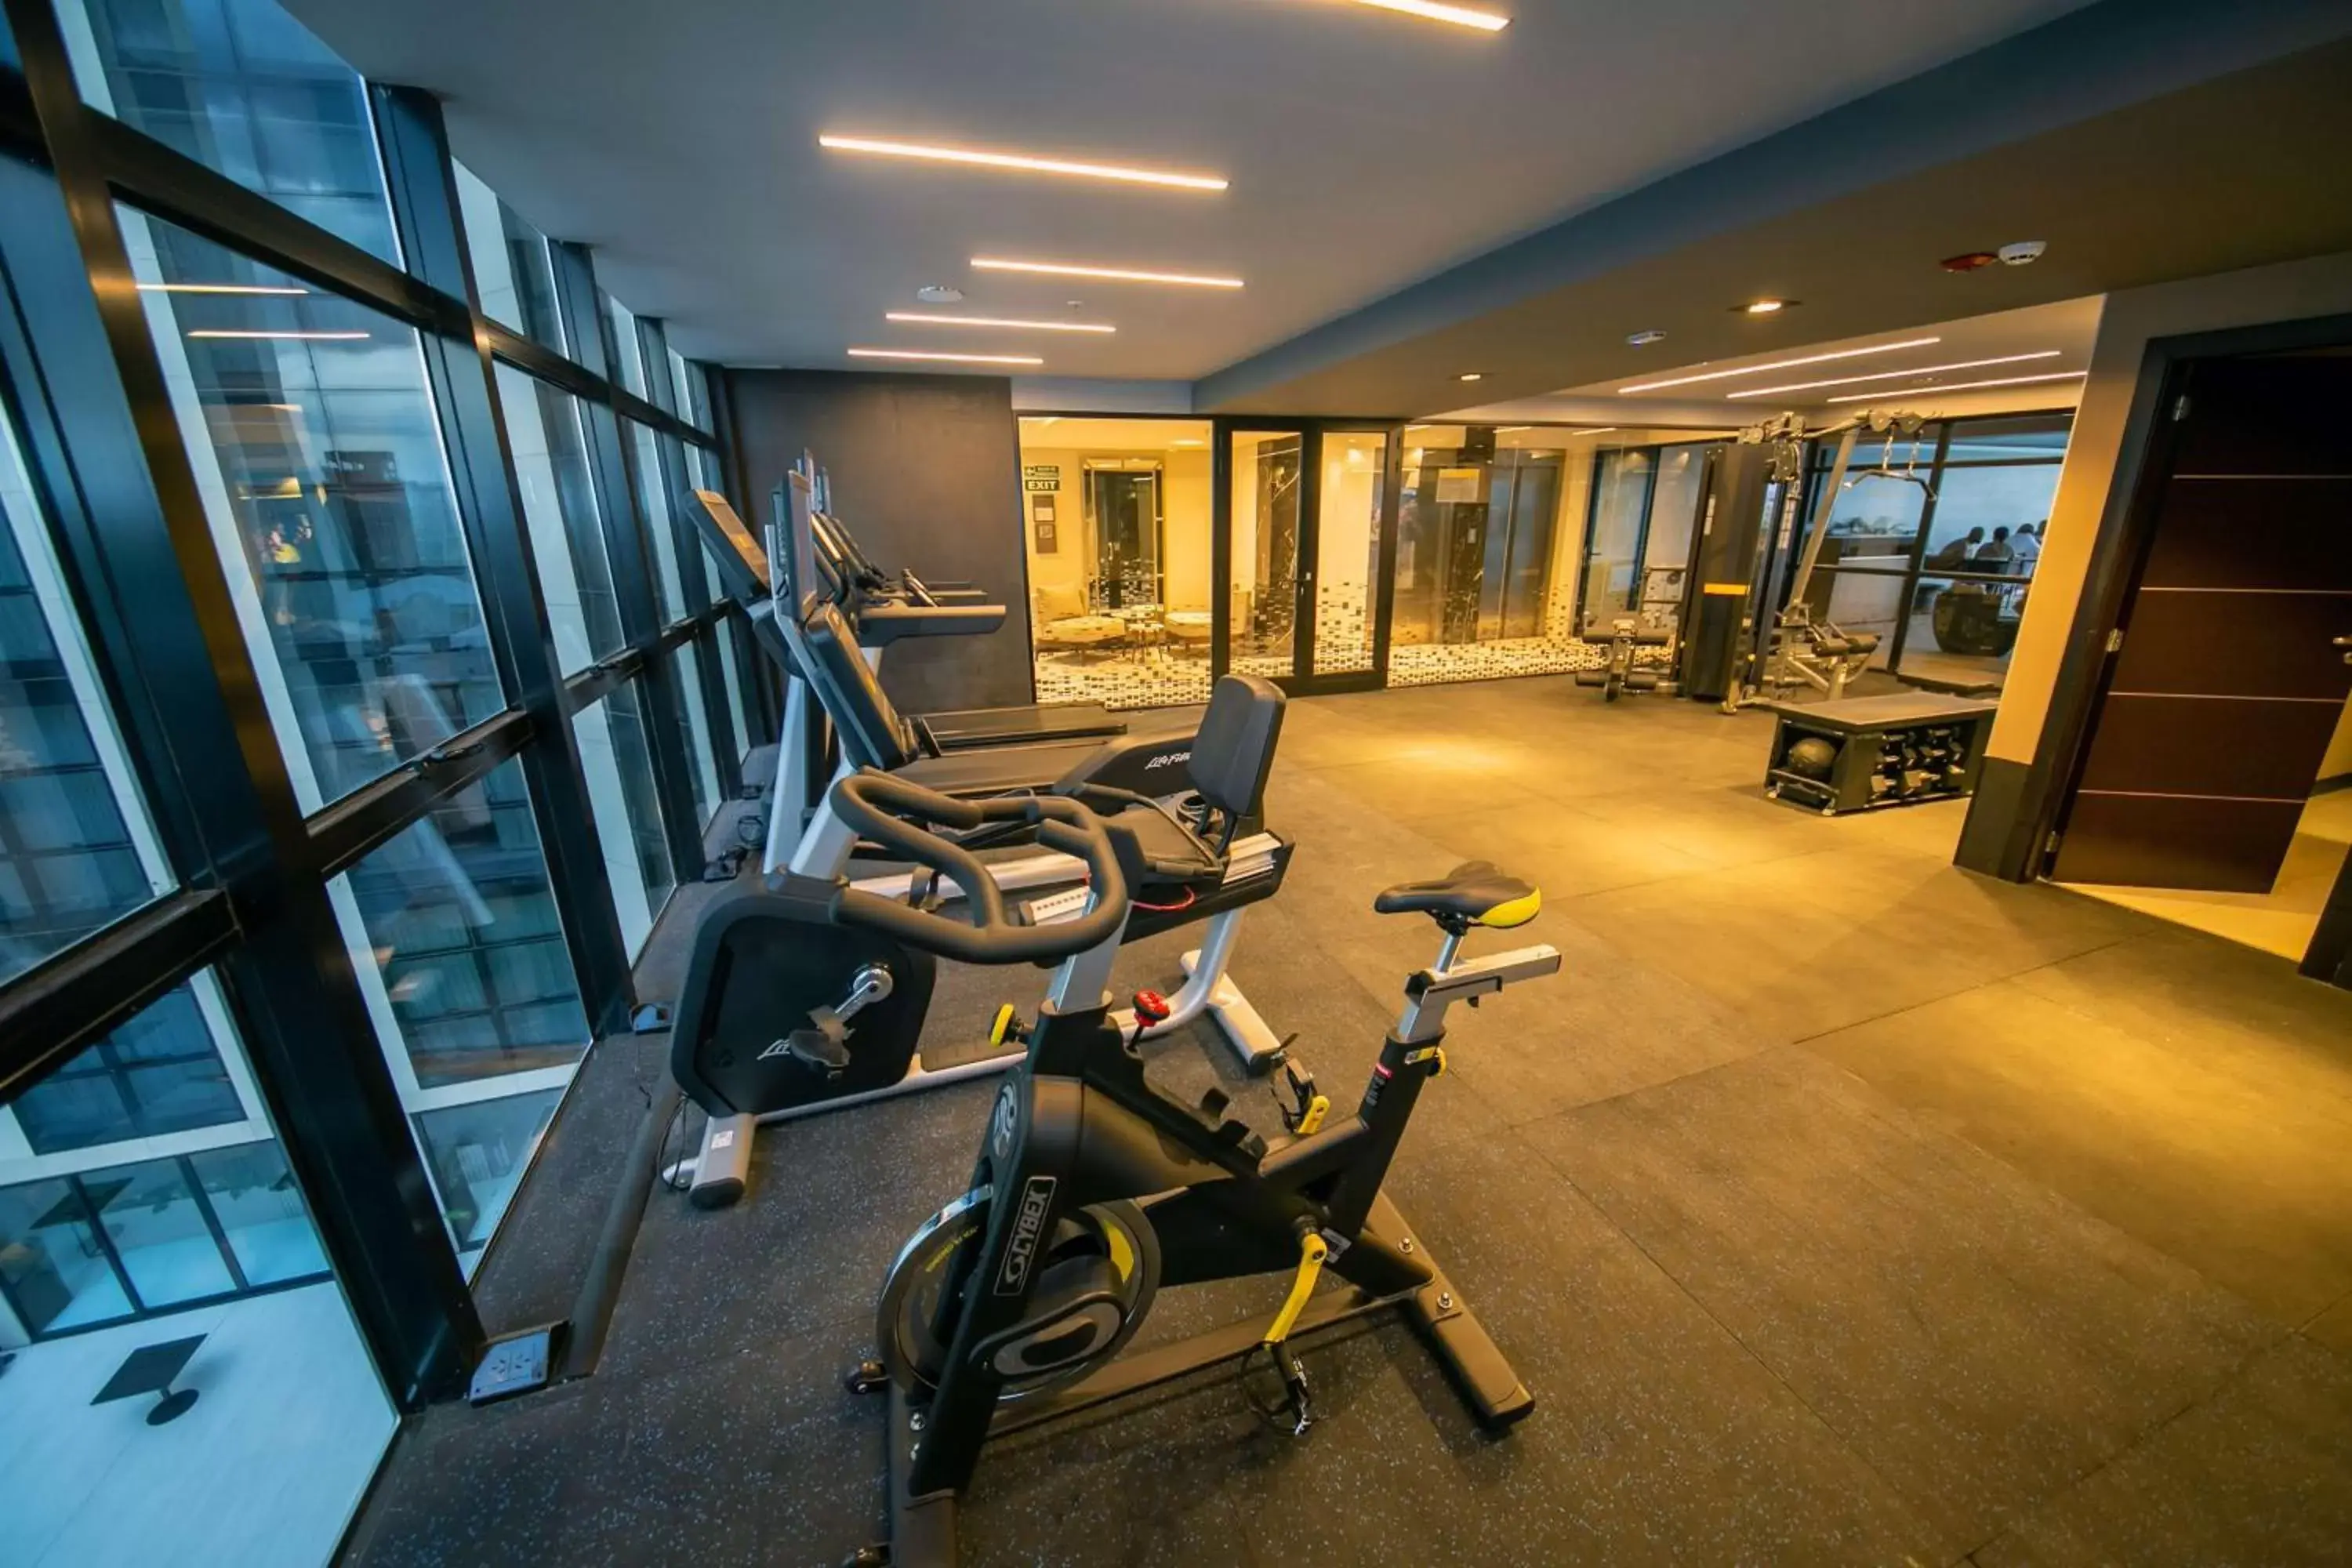 Fitness centre/facilities, Fitness Center/Facilities in Hilton Garden Inn Santiago Del Estero - 4 Estrellas